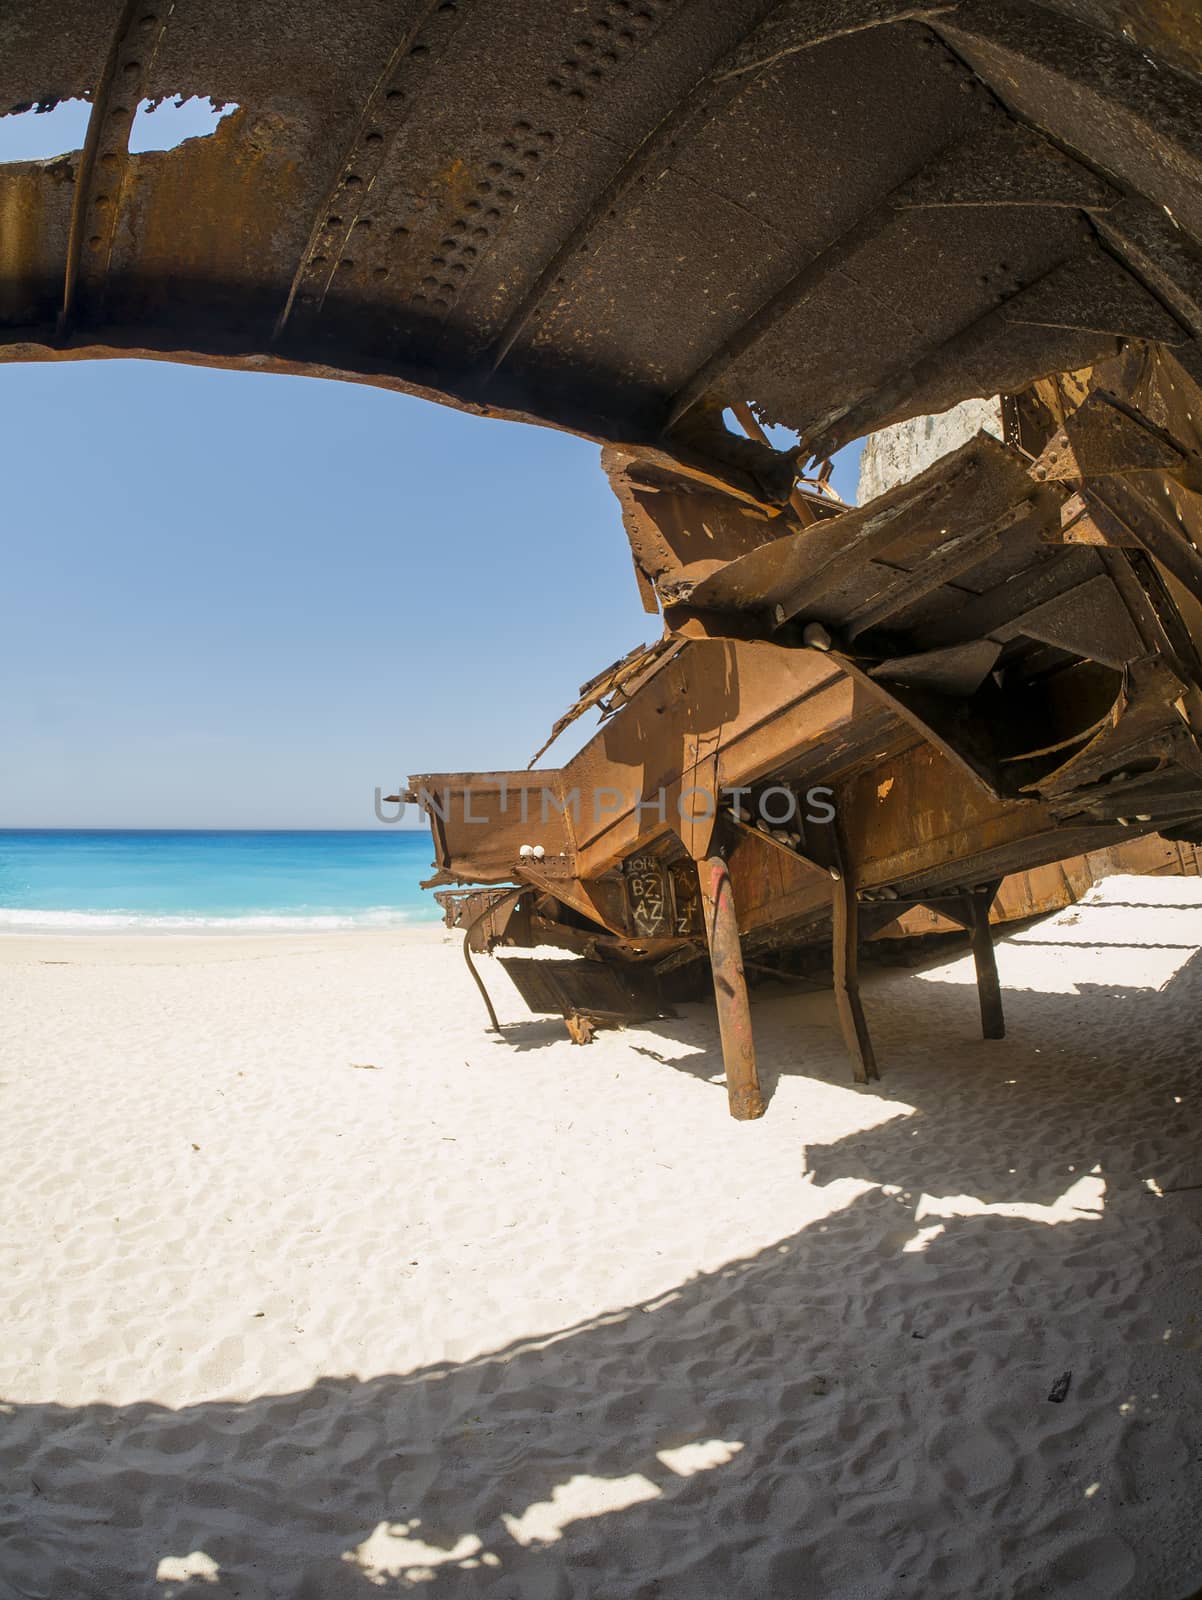 The famous Navagio Shipwreck beach in Zakynthos island  by Netfalls